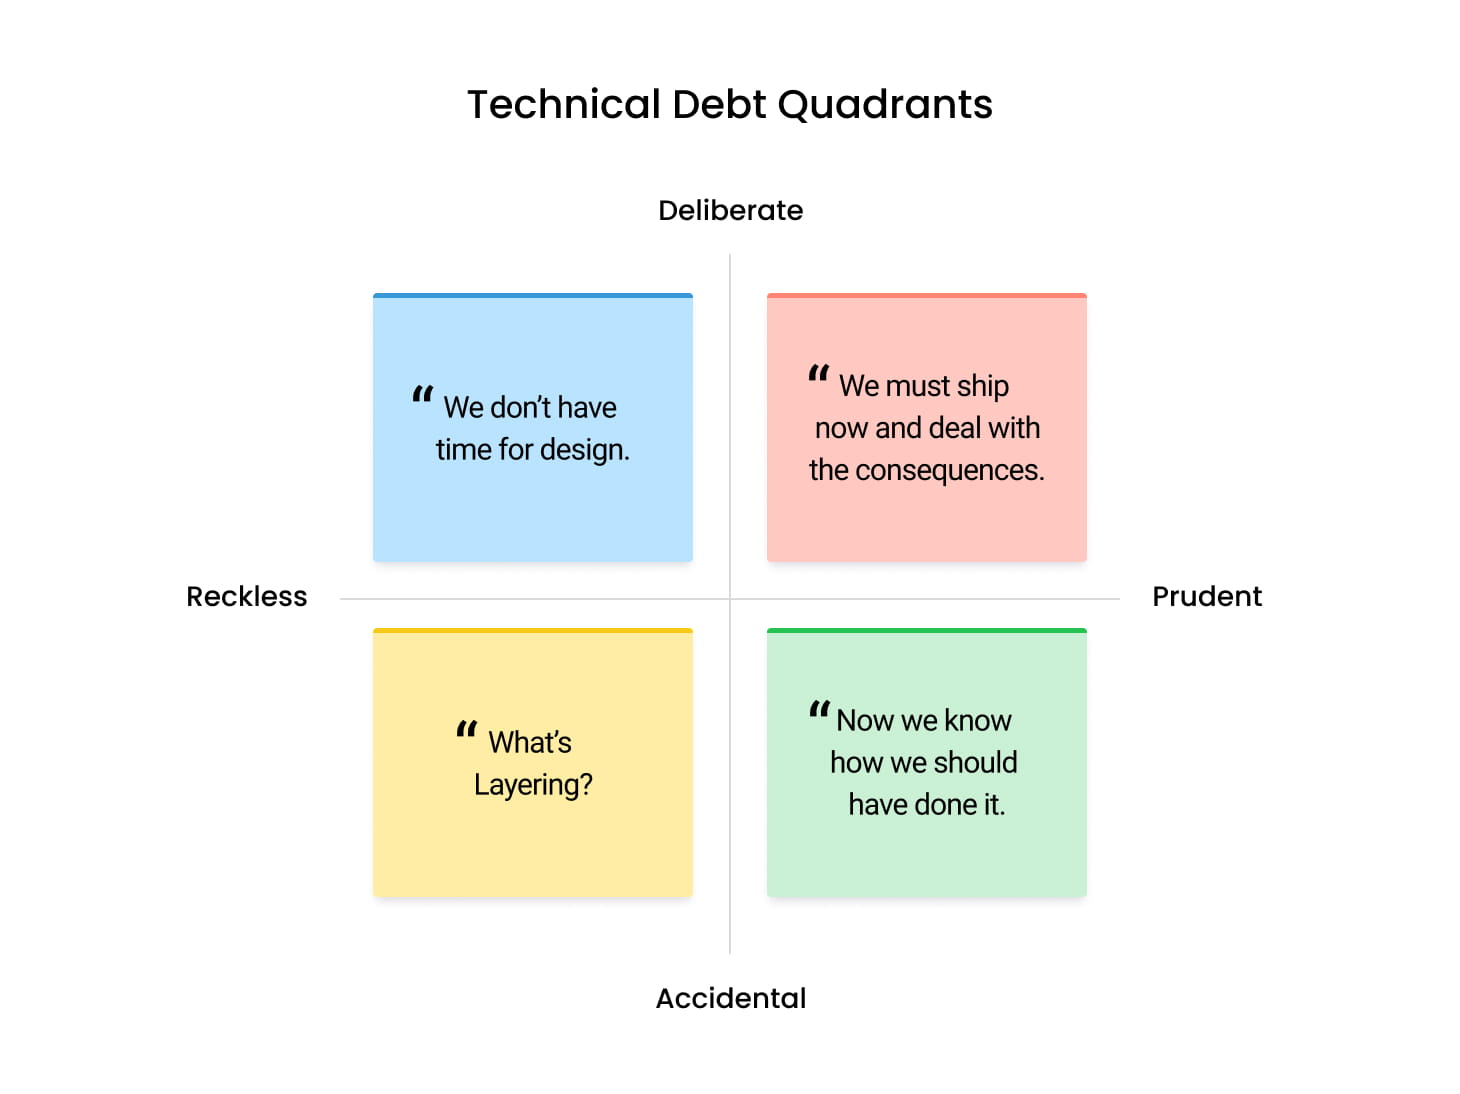 The Technical Debt Quadrant